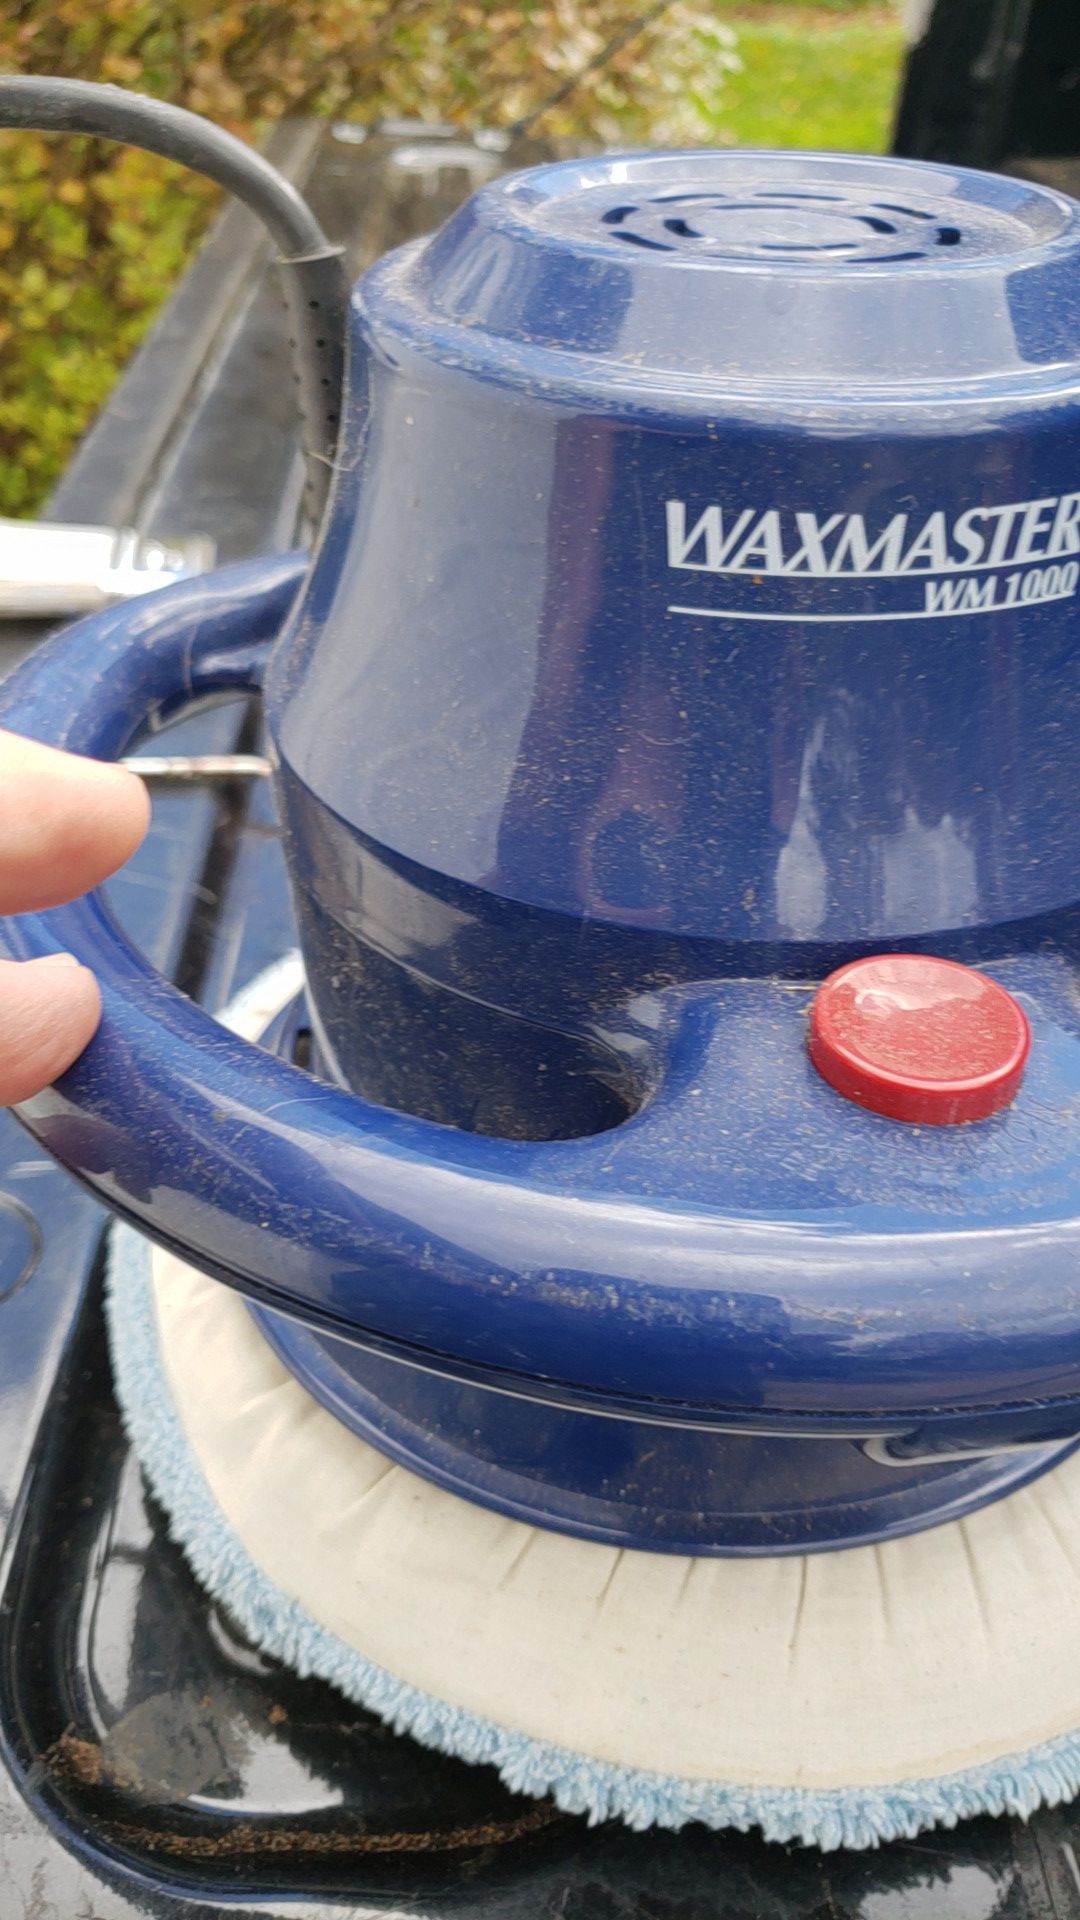 Wax master car polisher